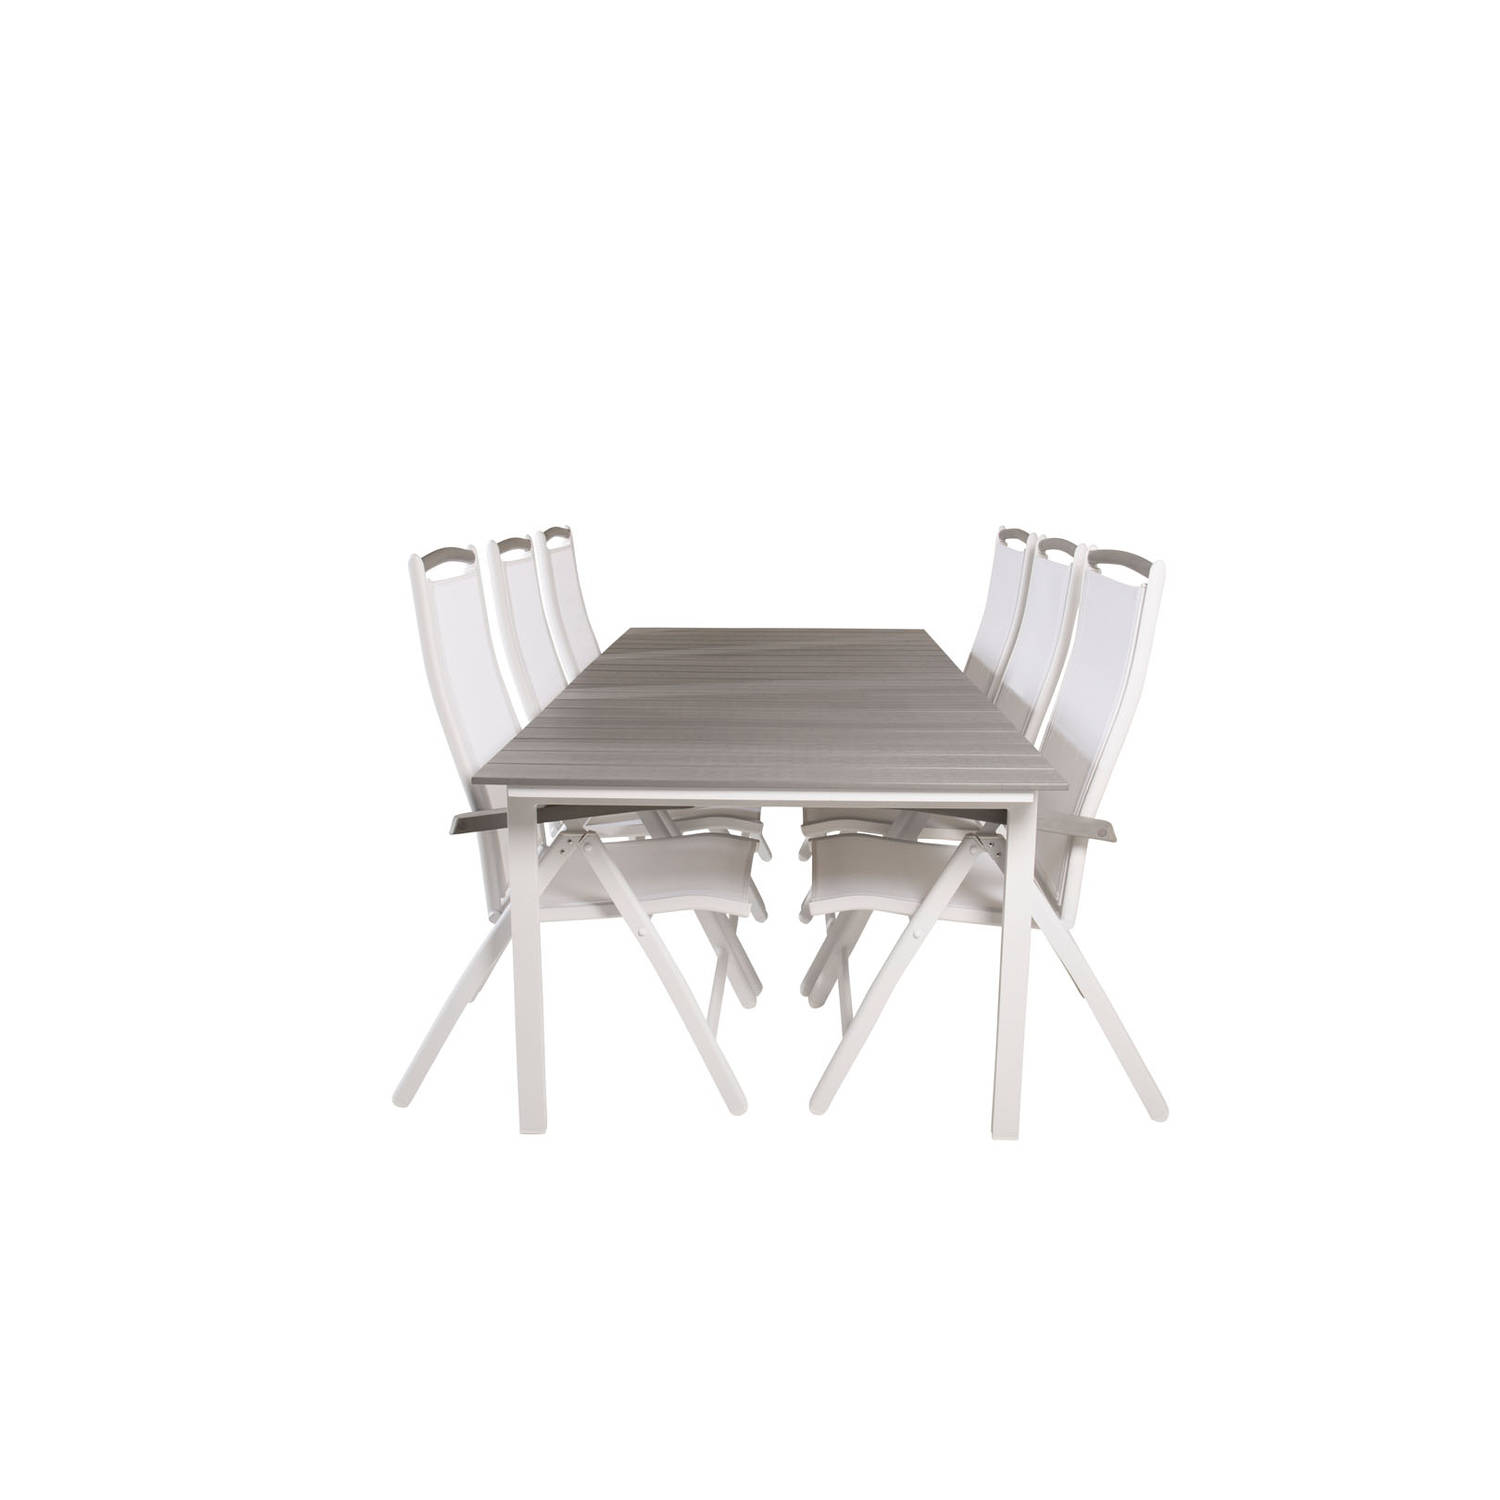 Blokker Tuinsets - Levels tuinmeubelset tafel 100x229/310cm en 6 stoel 5posalu Albany wit, grijs. aanbieding